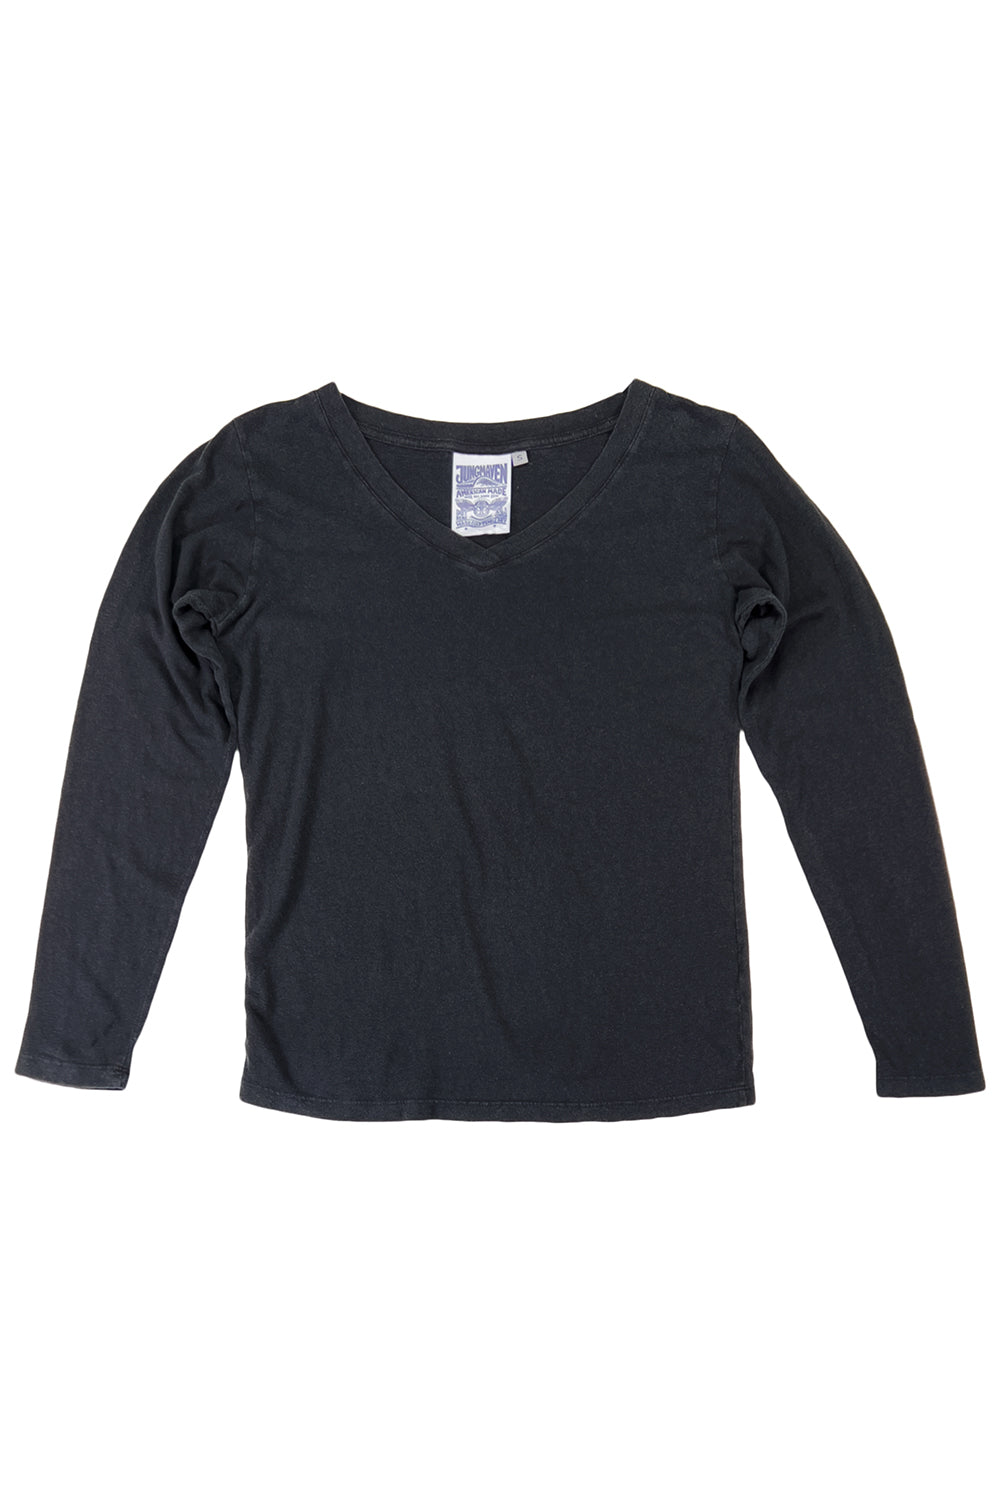 Finch Long Sleeve V-neck | Jungmaven Hemp Clothing & Accessories / Color: Black